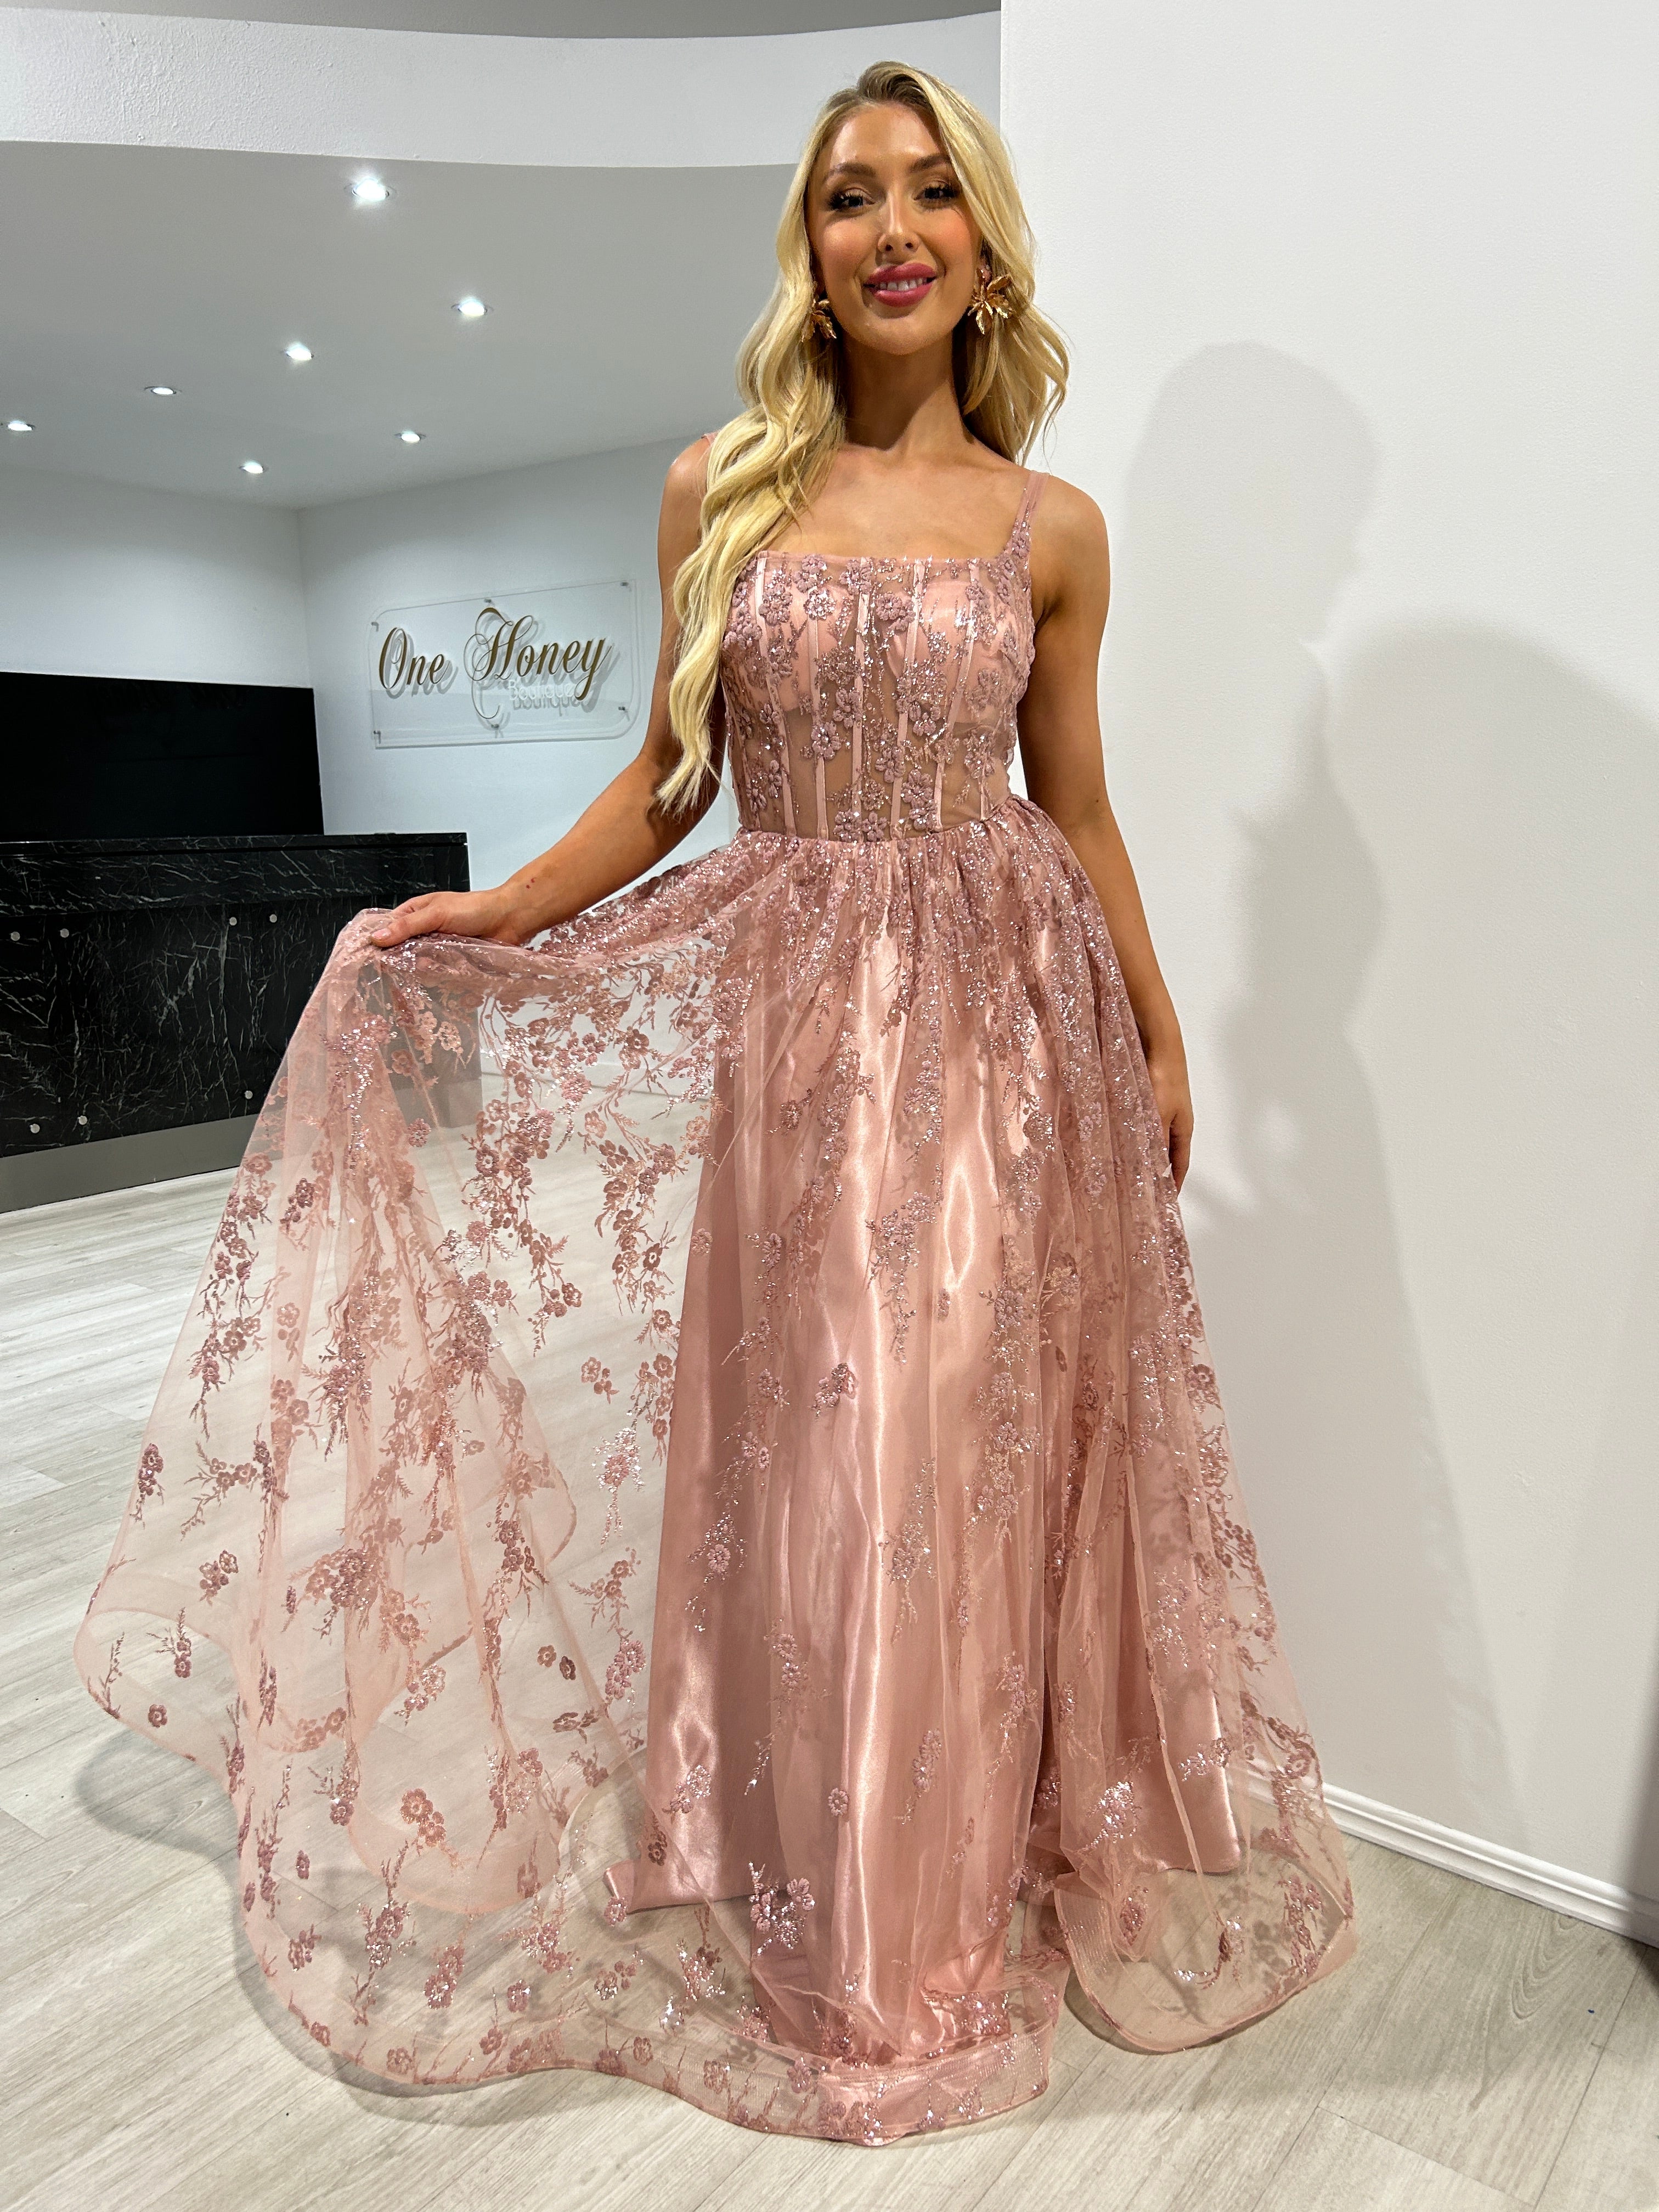 Honey Couture BELLAMY Rose Gold Glitter Ball Gown Formal Dress